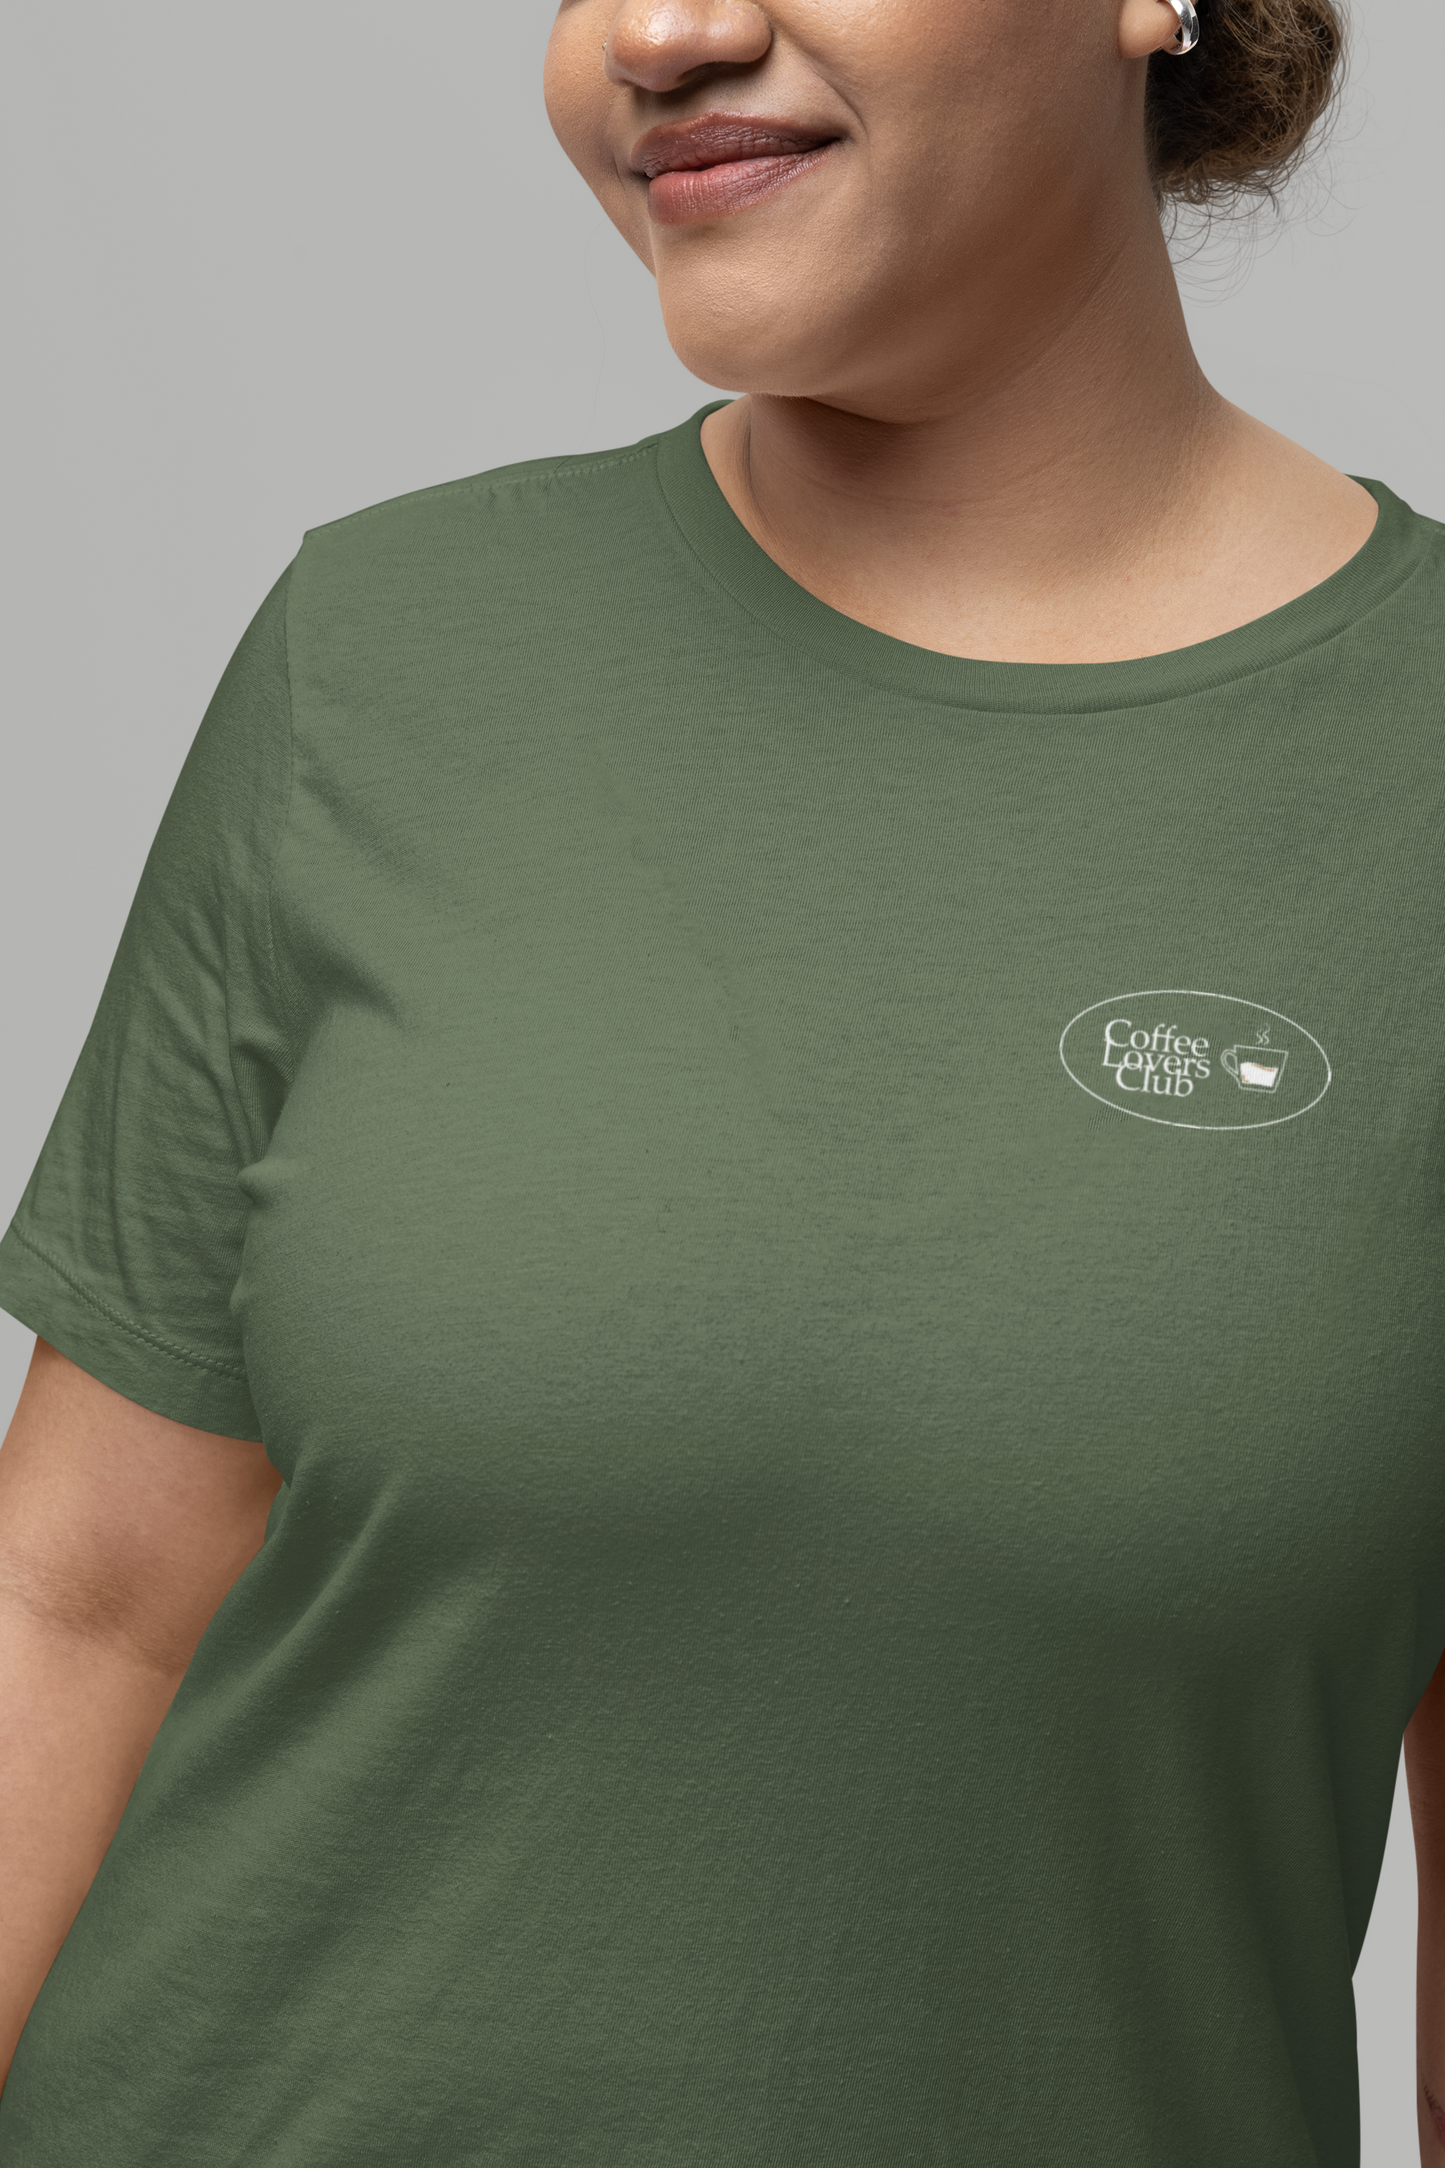 Camiseta Coffee Lovers Club Military Green